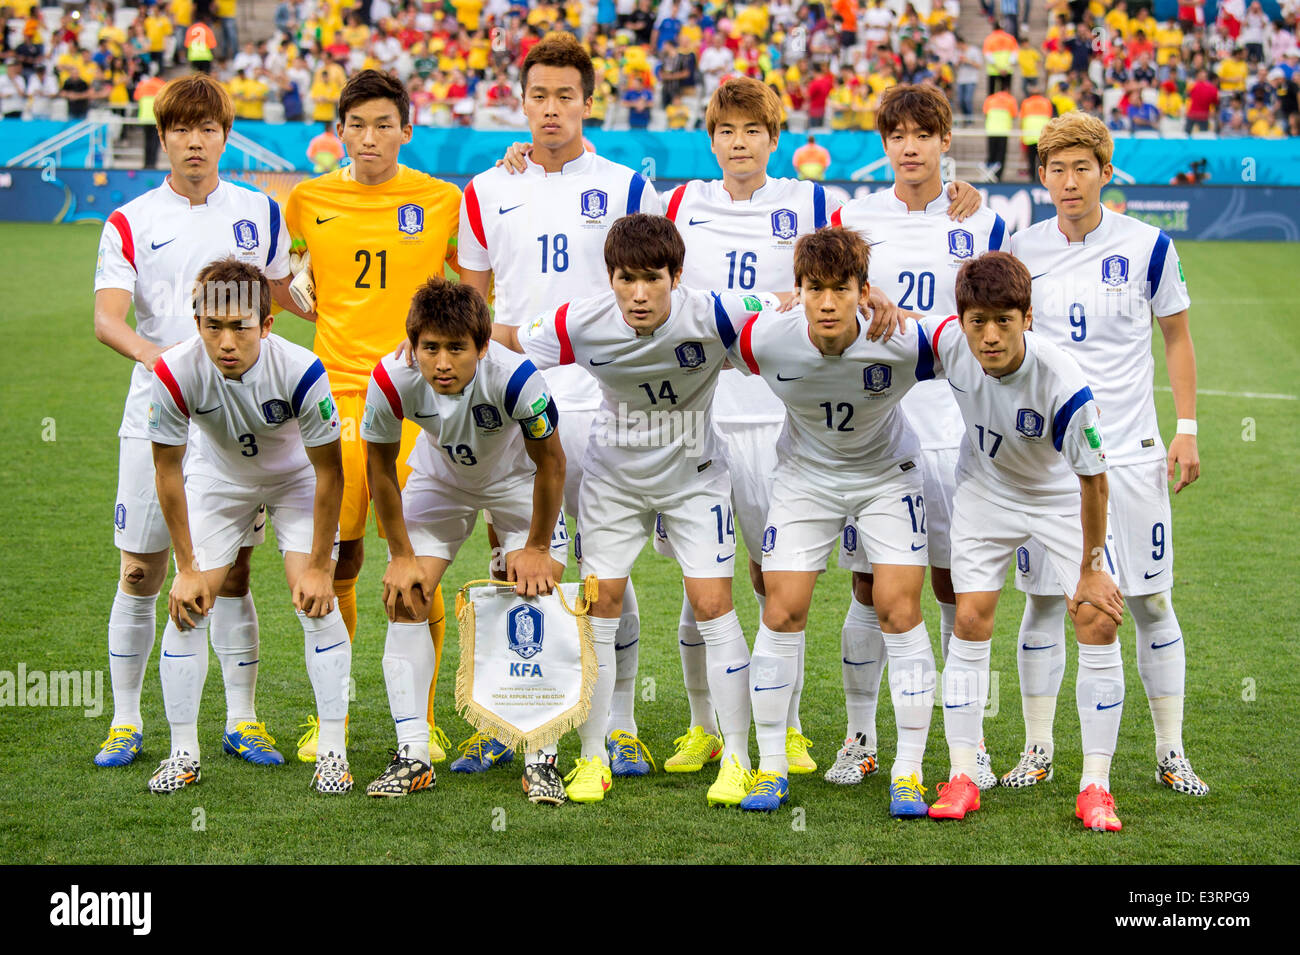 Sao Paulo, Brazil. 26th June, 2014. South Korea team group line up (KOR) Football/Soccer : South Korea team group (Top L-R) Kim Young-Gwon, Kim Seung-Gyu, Kim Shin-Wook, Ki Sung-Yueng, Hong Jeong-Ho, Son Heung-Min, (Bottom L-R) Yun Suk-Young, Koo Ja-Cheol, Han Kook-Young, Lee Yong, Lee Chung-Yong, before the FIFA World Cup Brazil 2014 Group H match between South Korea 0-1 Belgium at the Arena Corinthians stadium in Sao Paulo, Brazil . © Maurizio Borsari/AFLO/Alamy Live News Stock Photo